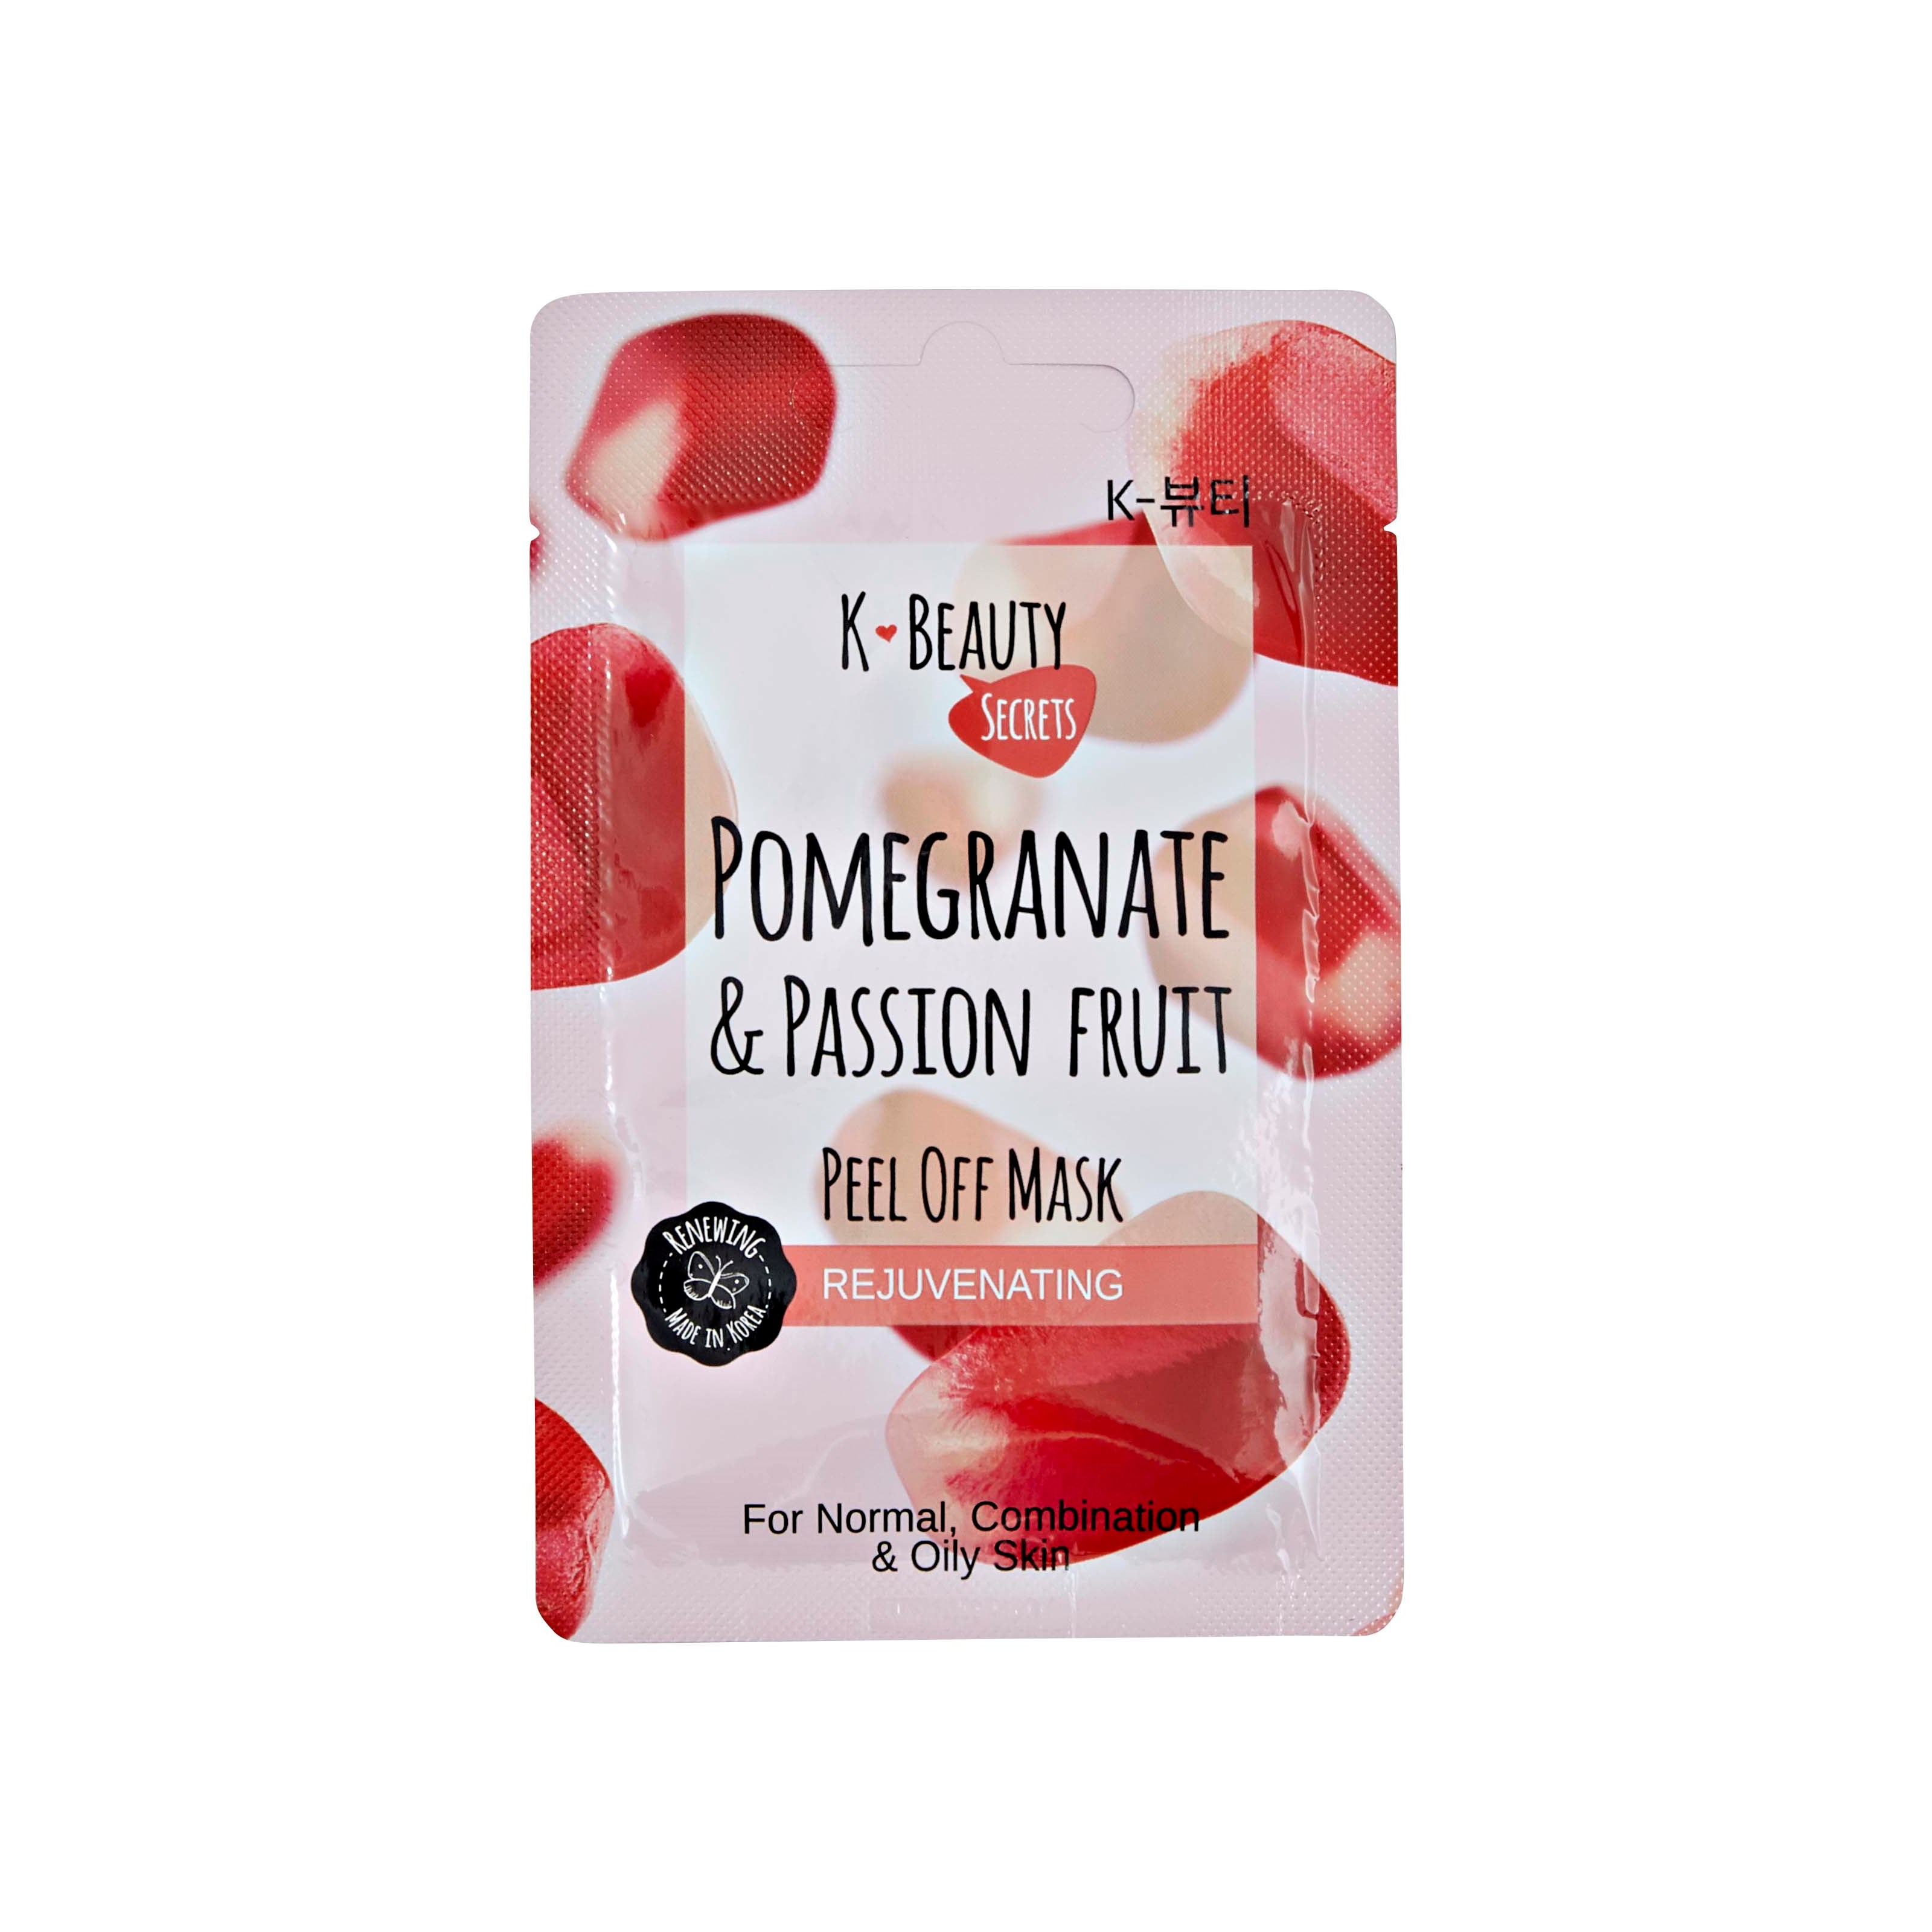 K- Beauty Secrets Pomegranate & Passion Fruit Peel Off Mask 15 g